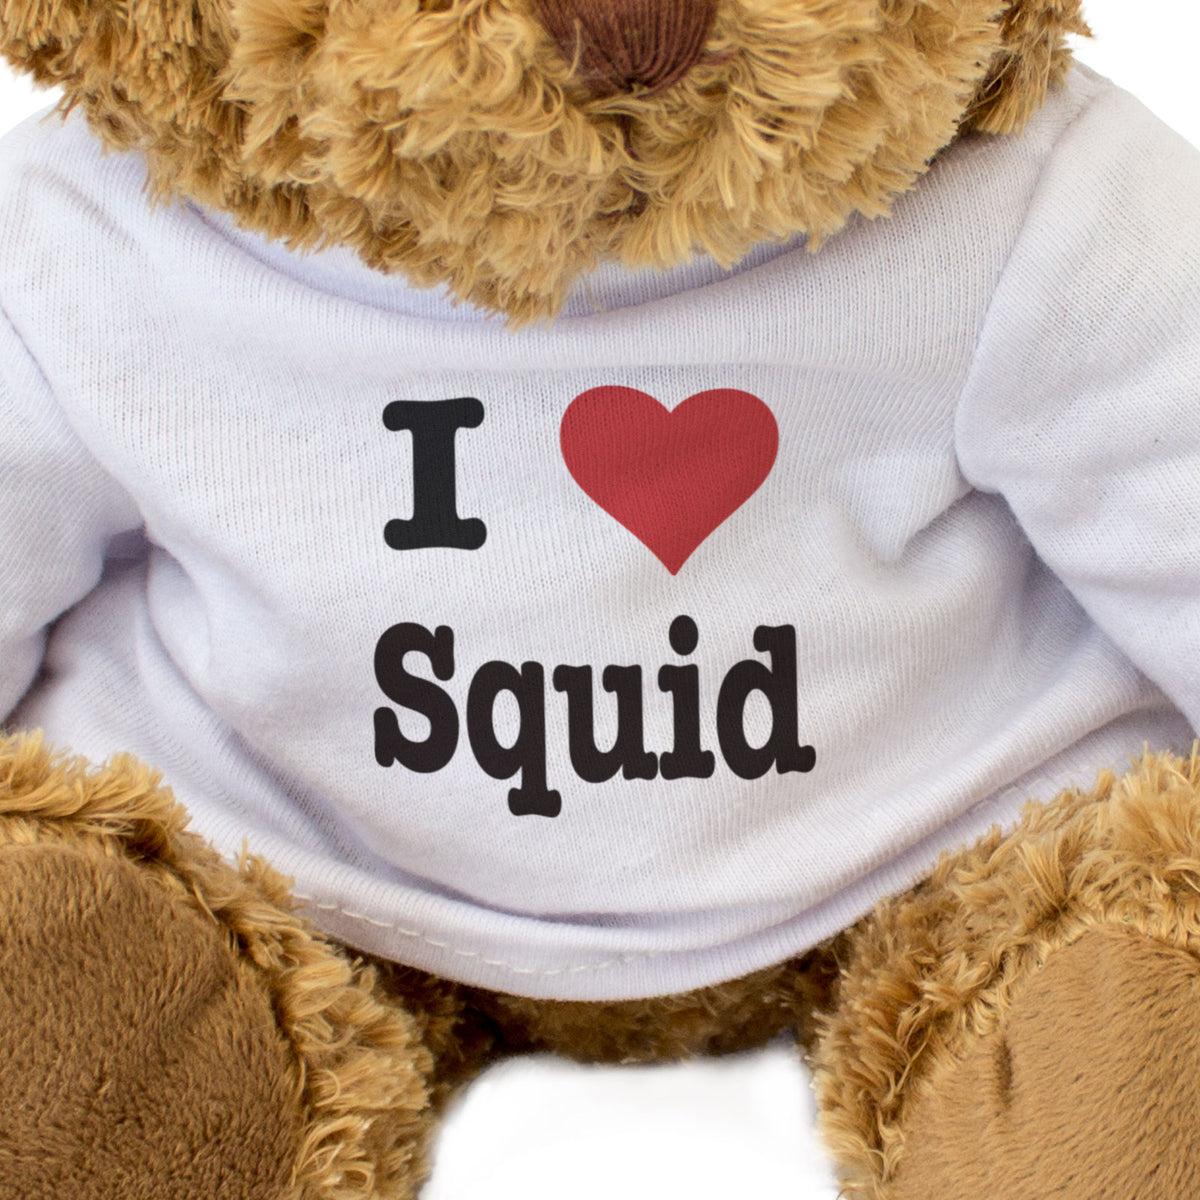 I Love Squid - Teddy Bear